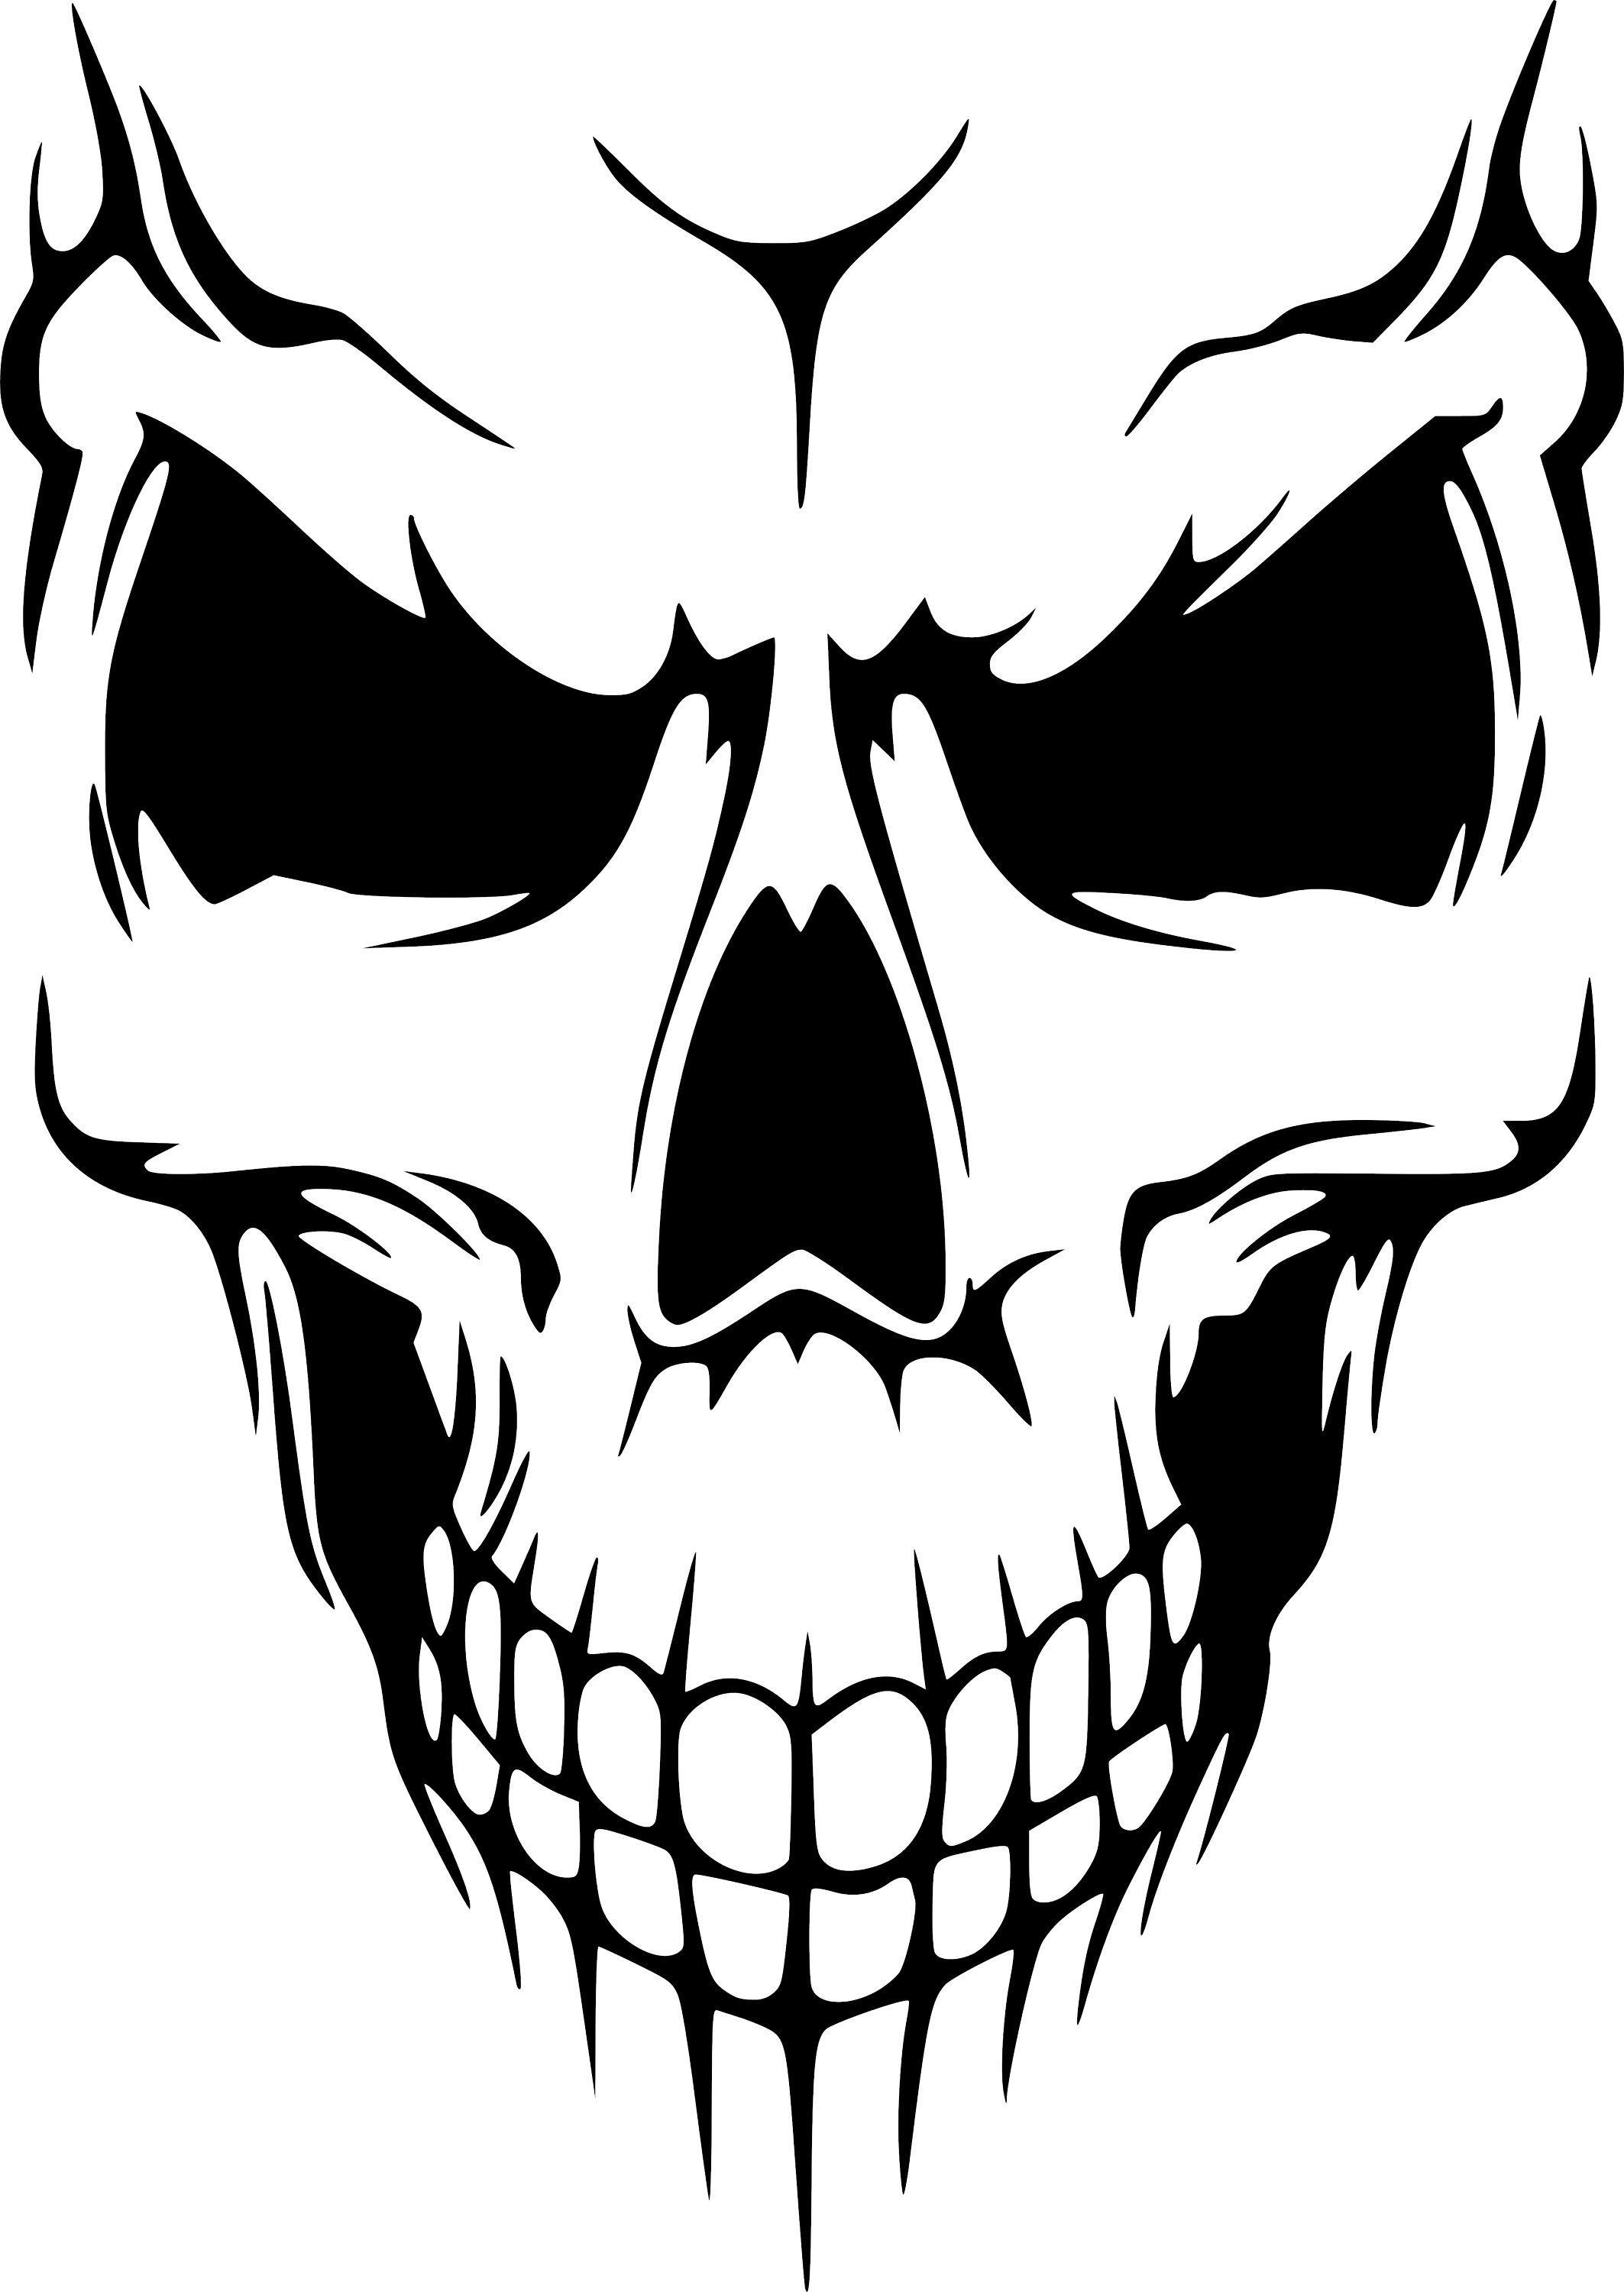 Skull Silhouette Vinyl Decal Sticker Horror Halloween Scary | Etsy